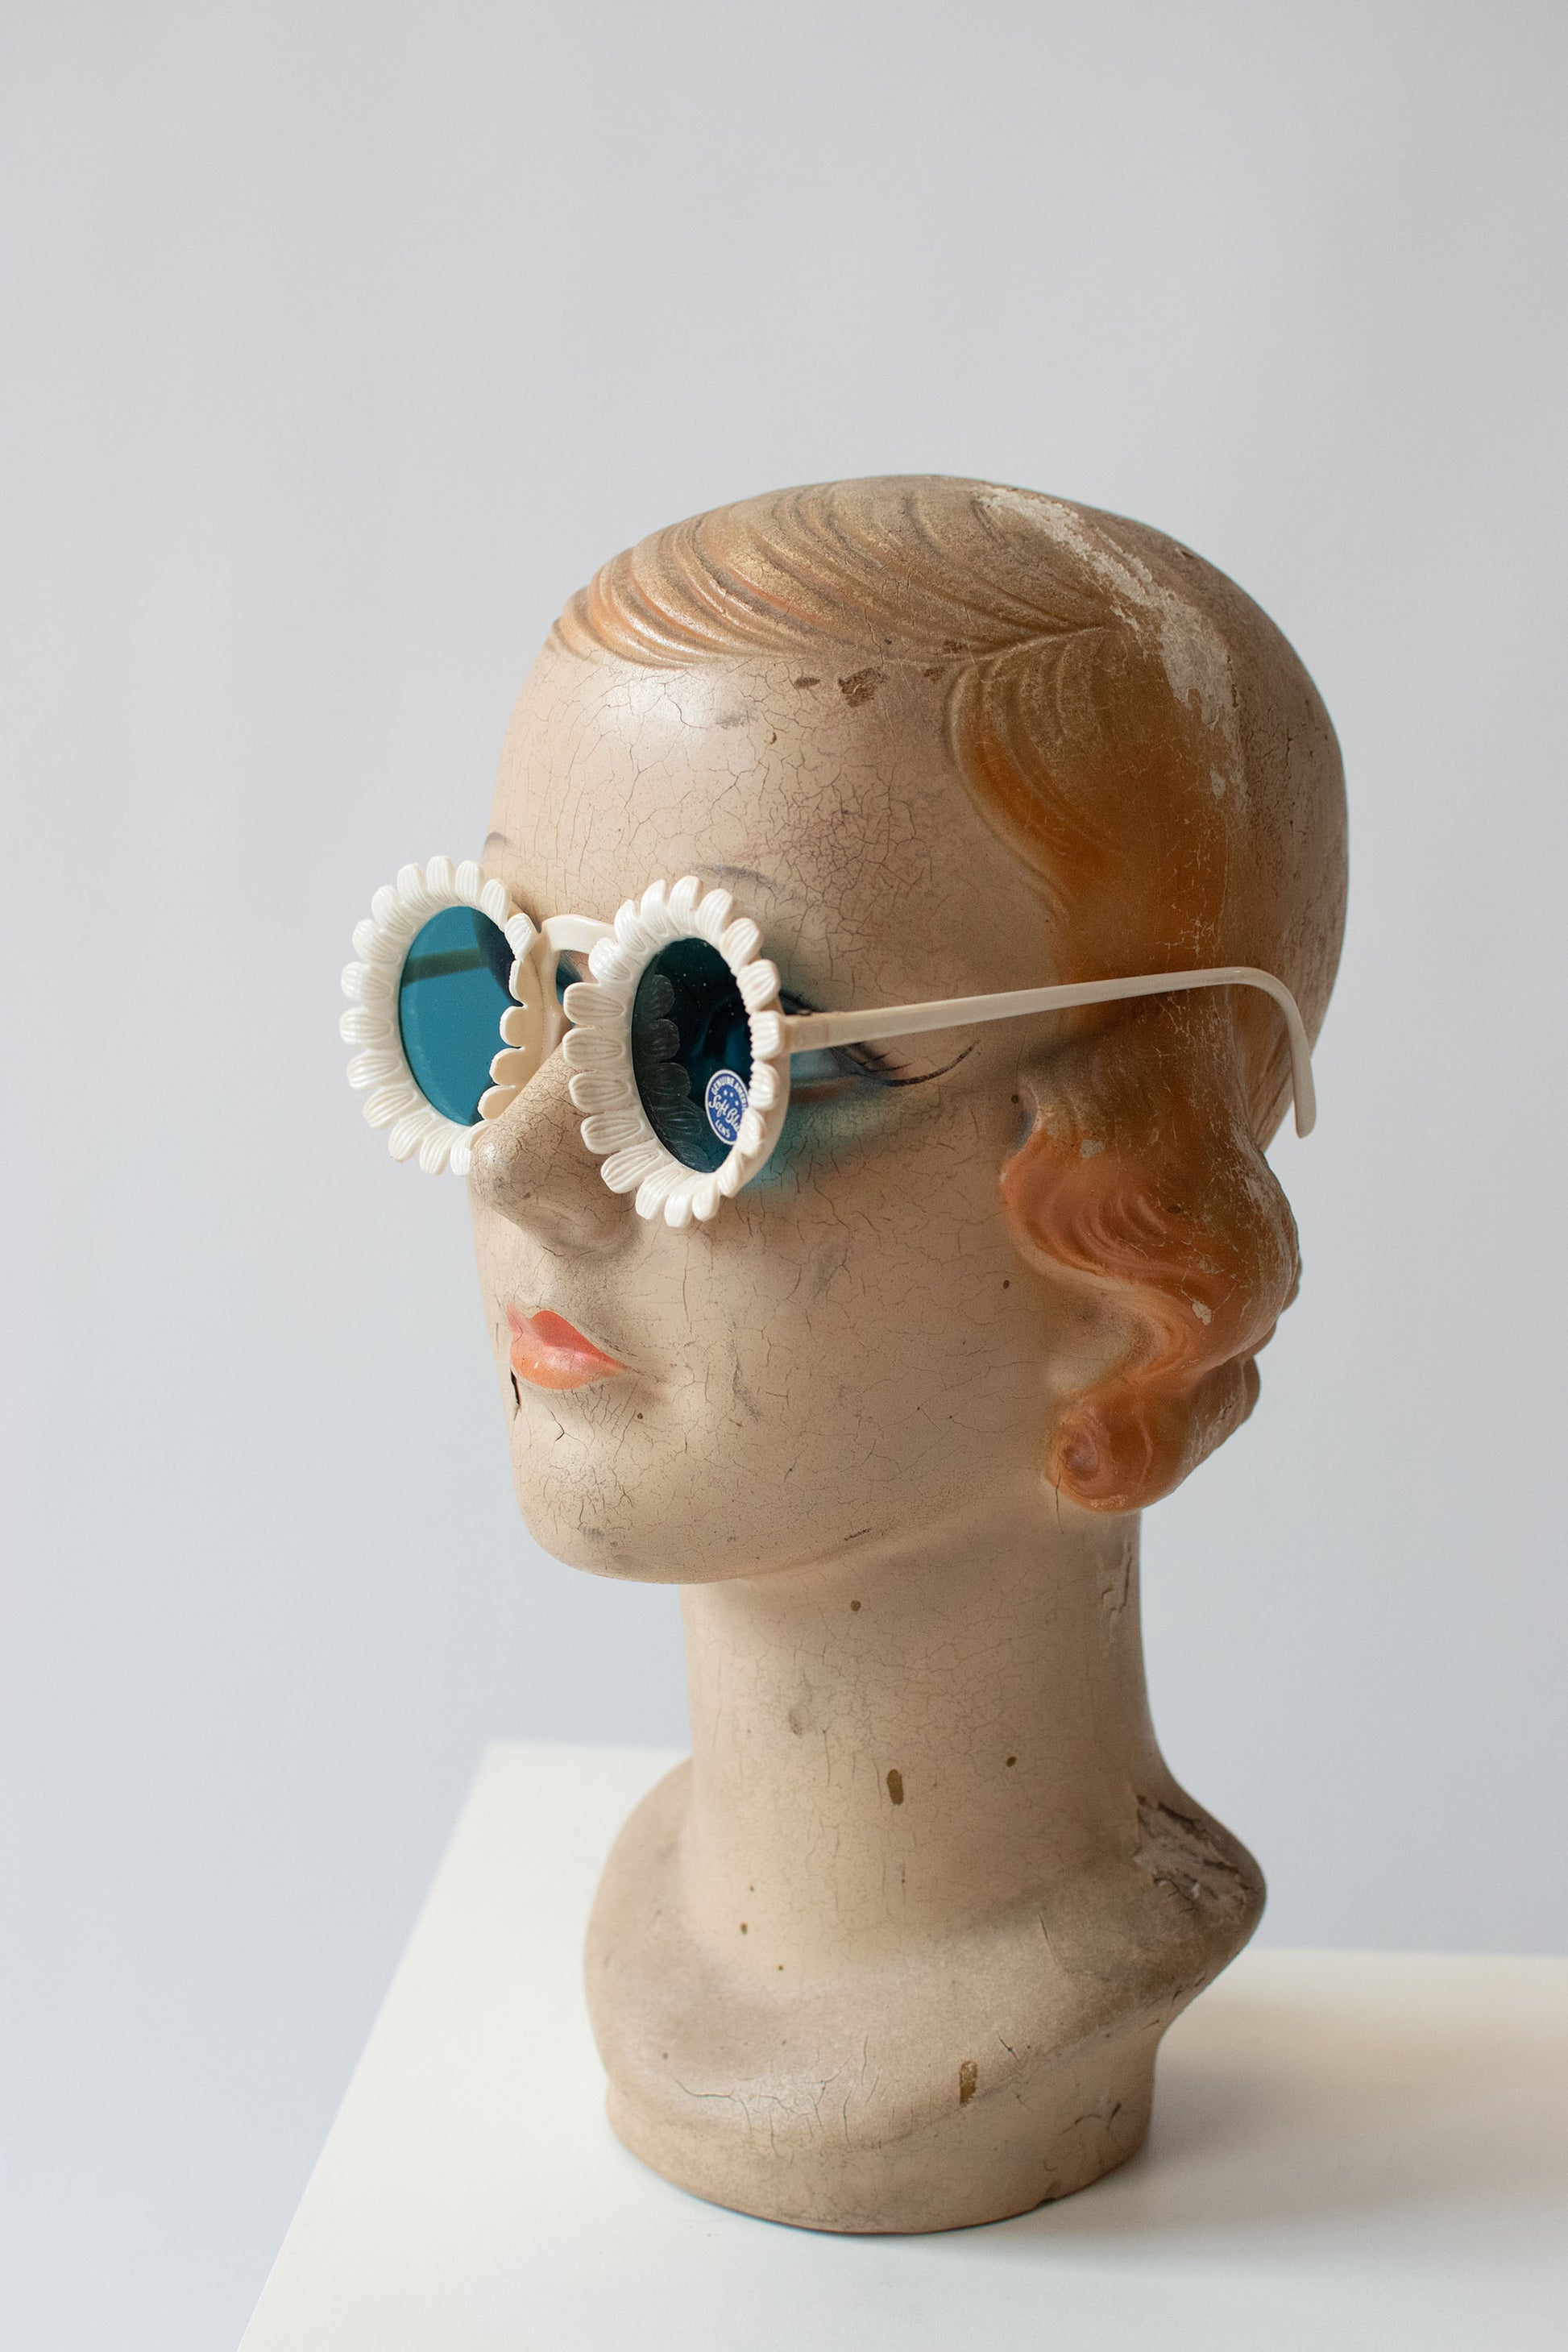 1940s Daisy Sunglasses  Blue Lenses – Female Hysteria Vintage